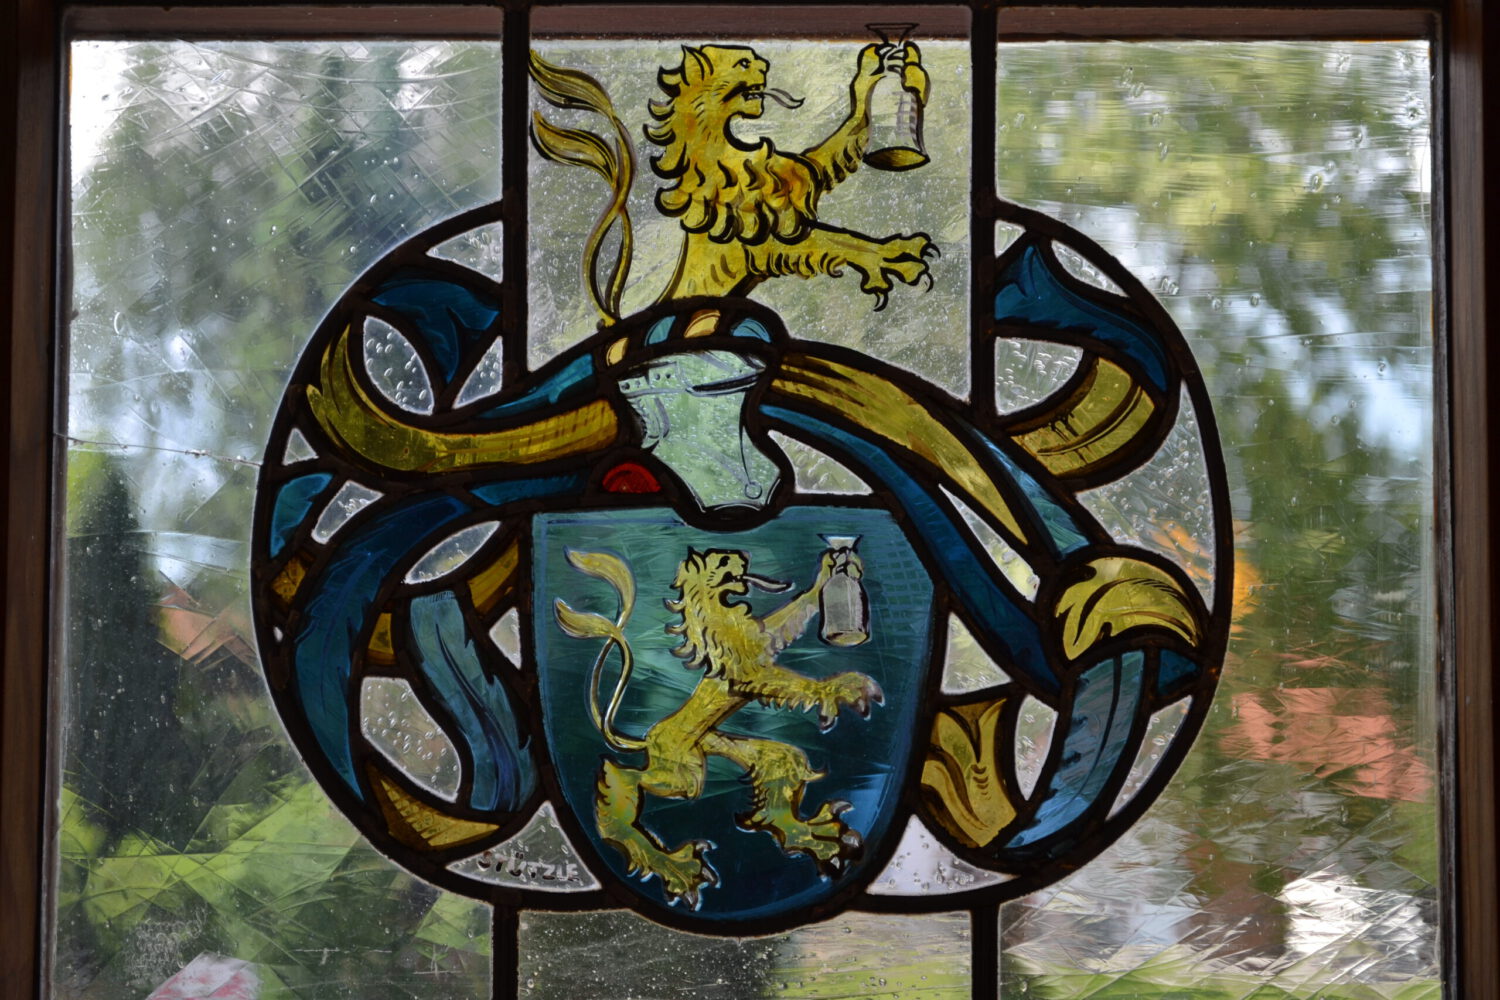 Yellow lion on blue Stützle coat of arms